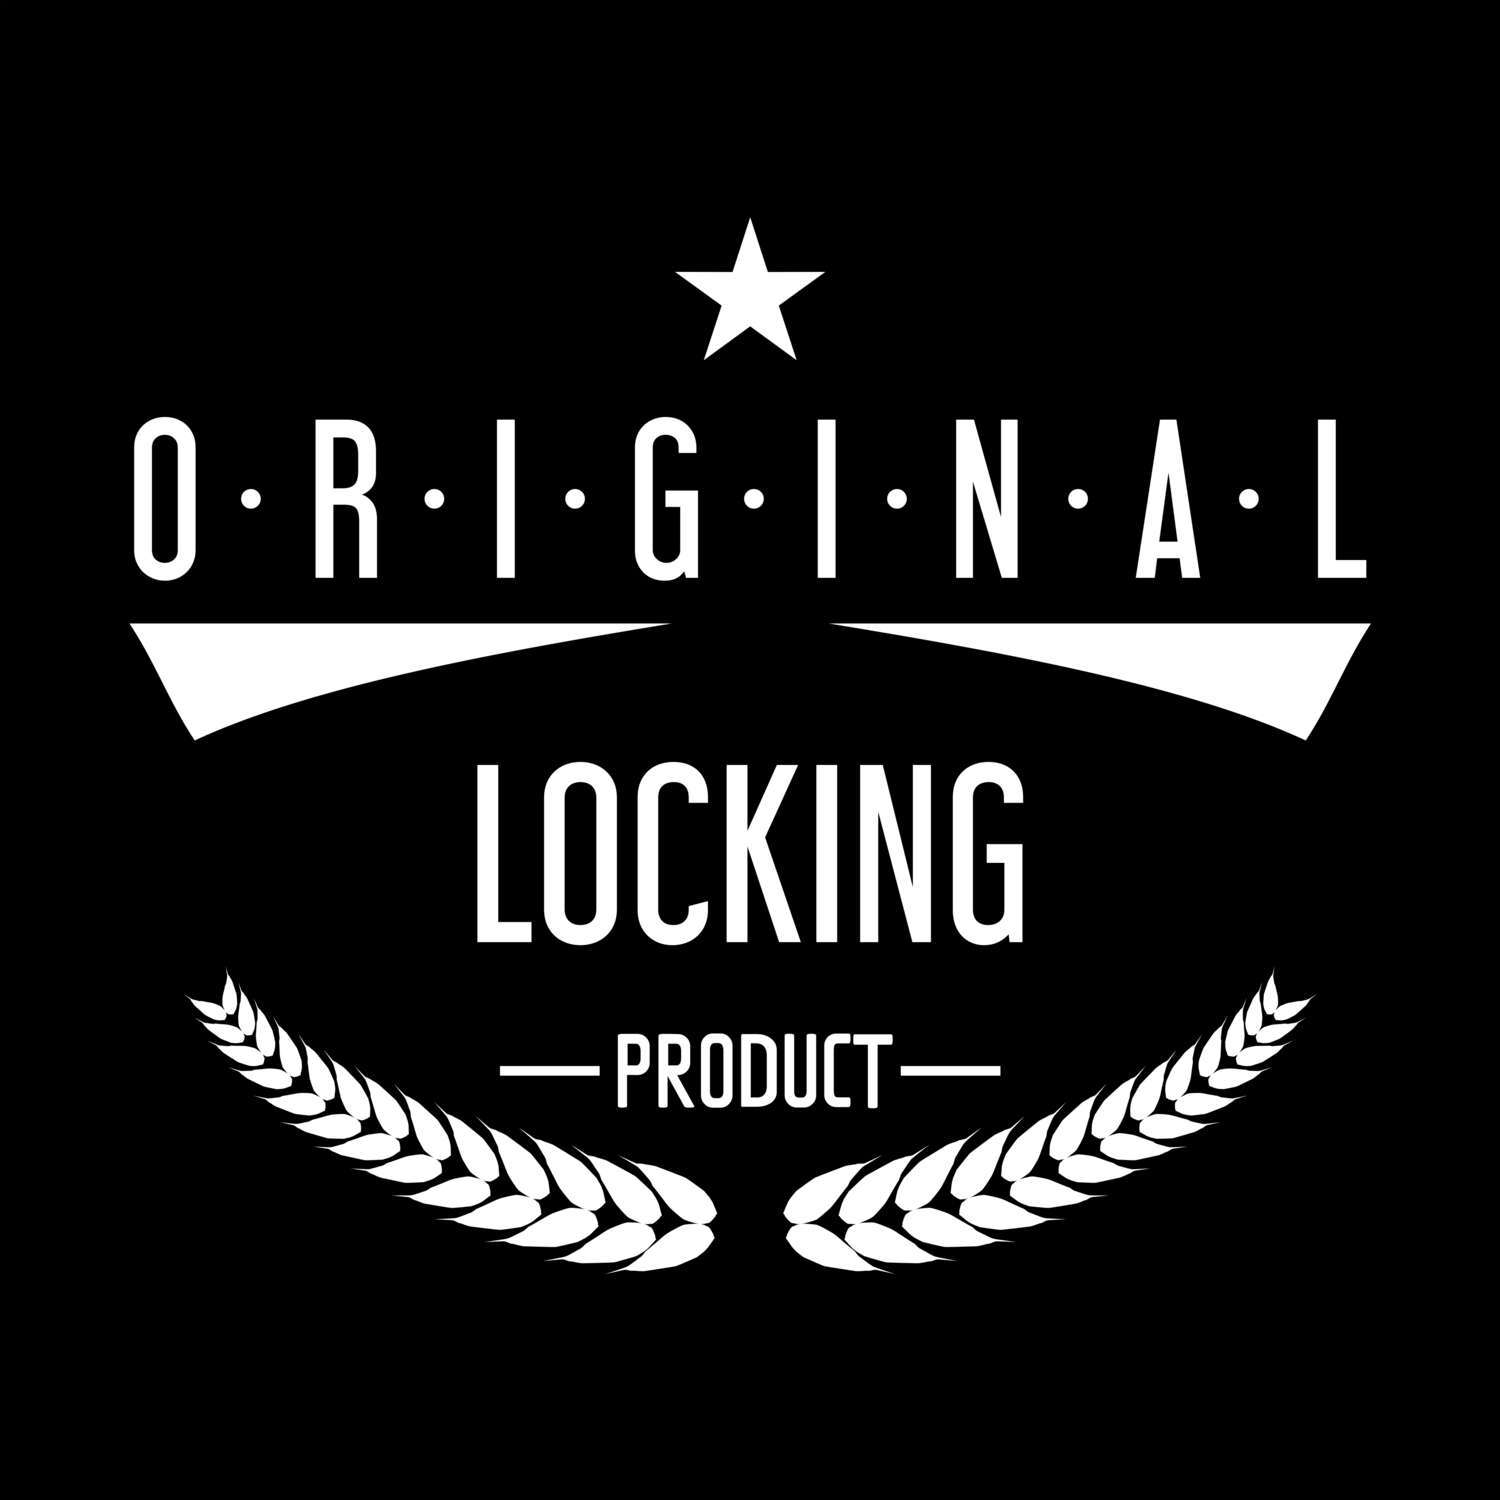 Locking T-Shirt »Original Product«